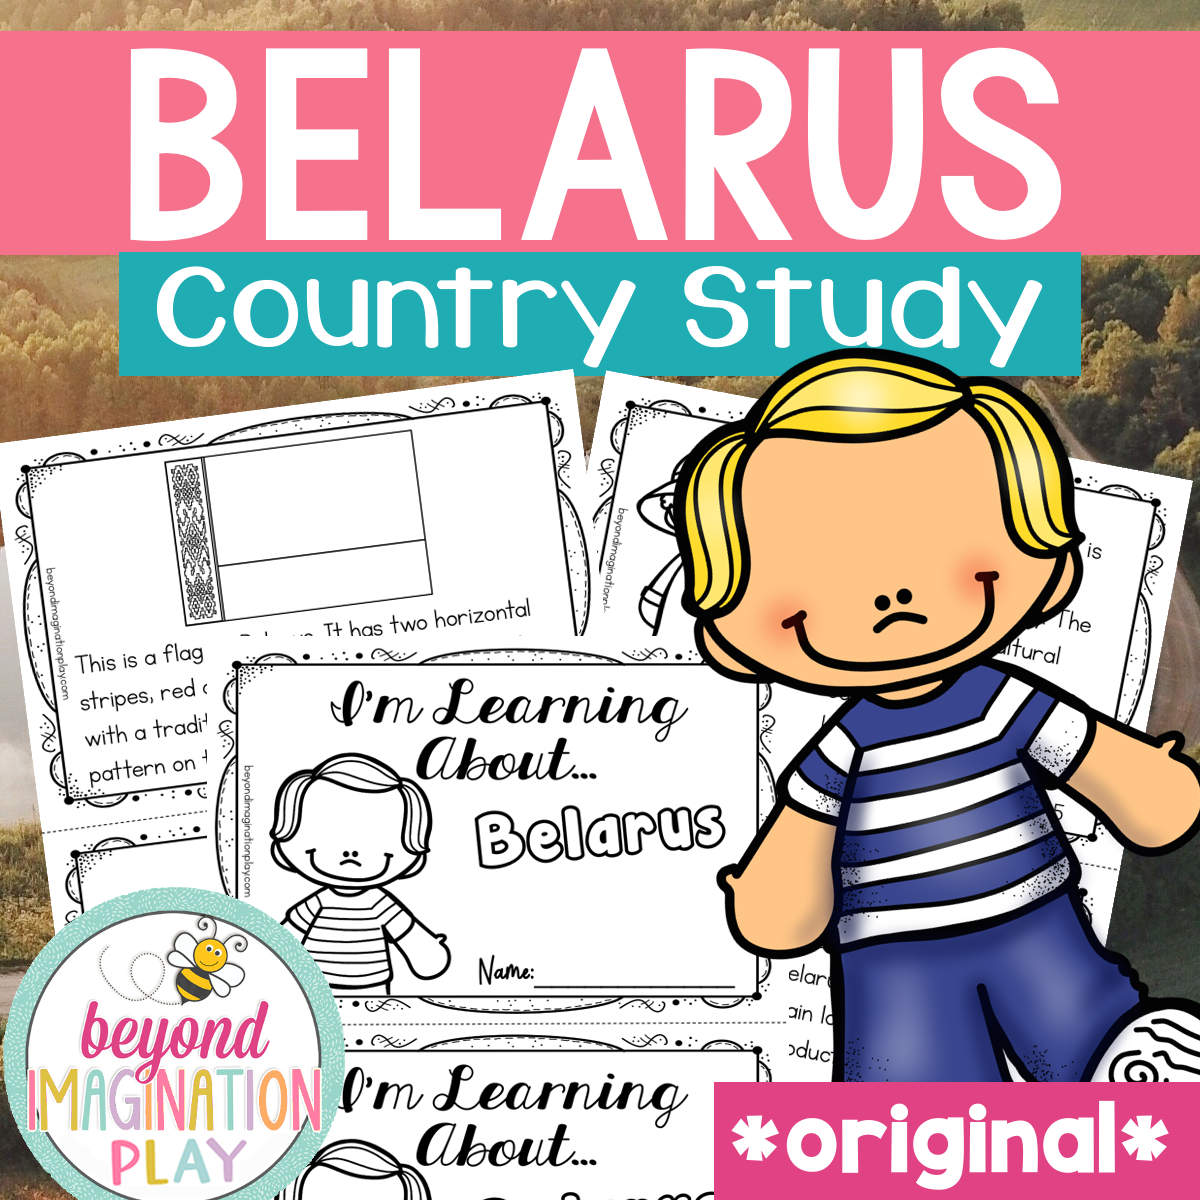 Belarus Country Study (Original Edition)